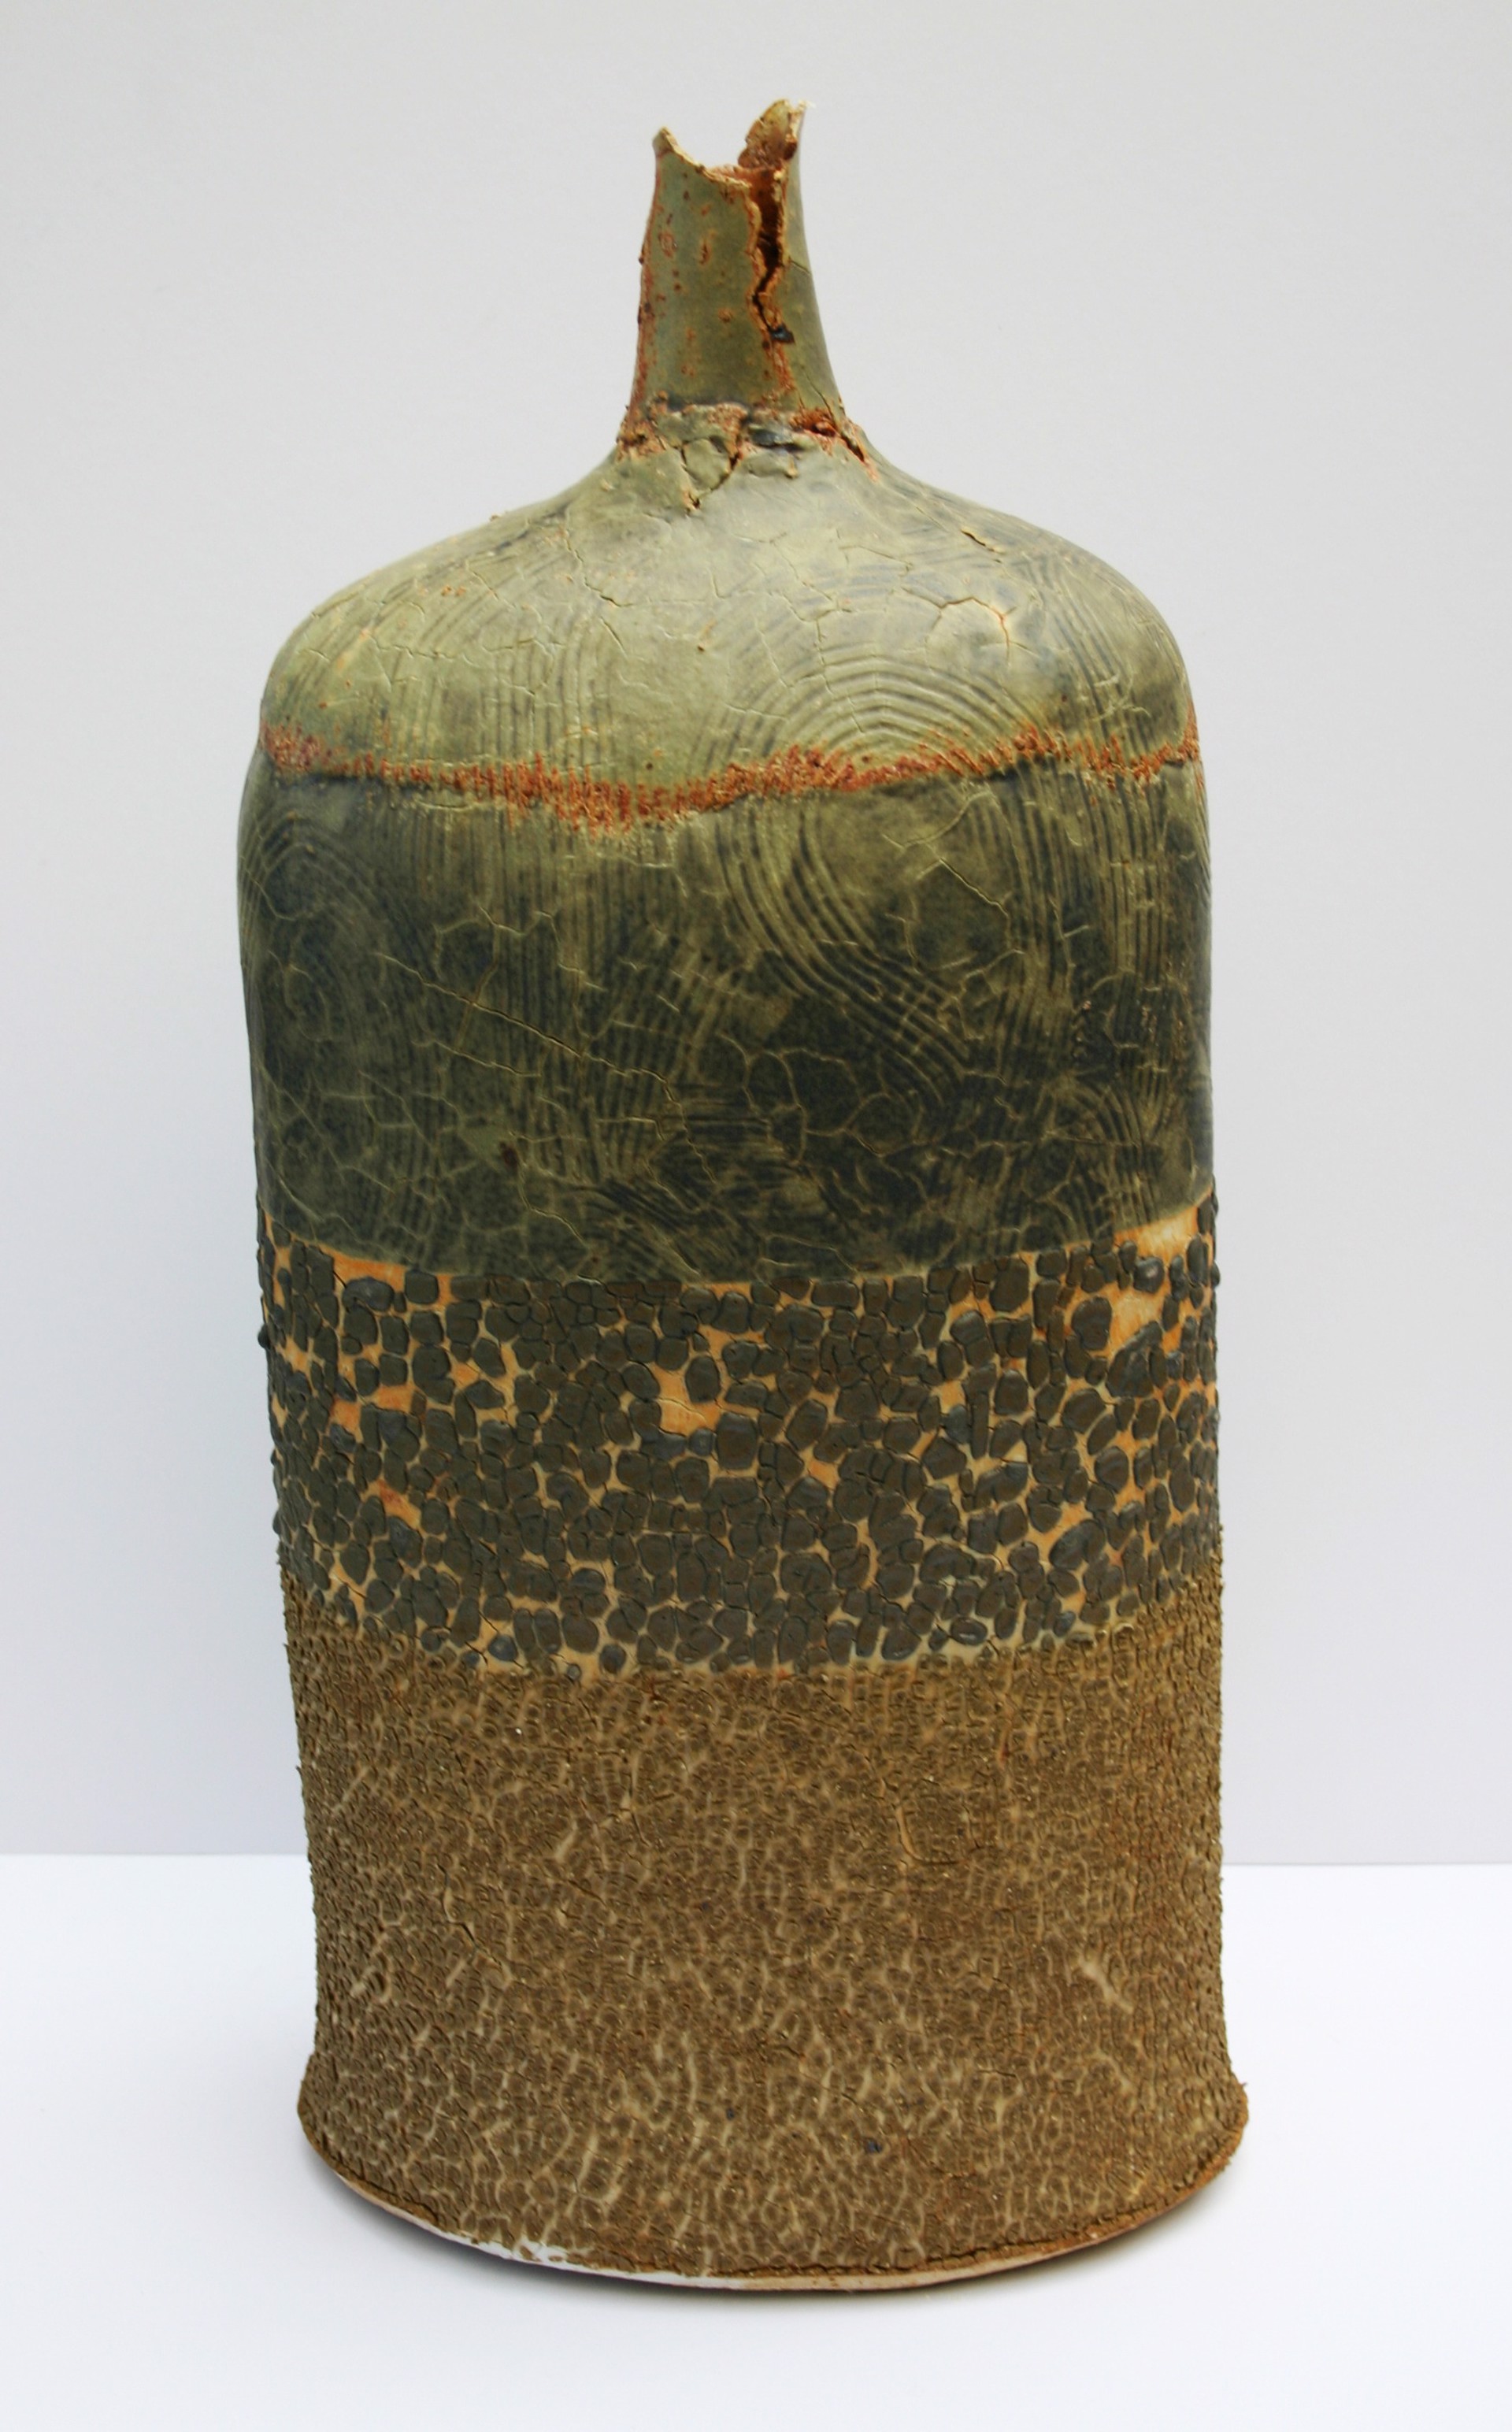 Saltmarsh Bottle with Combed Porcelain Overlay by Jane Wheeler